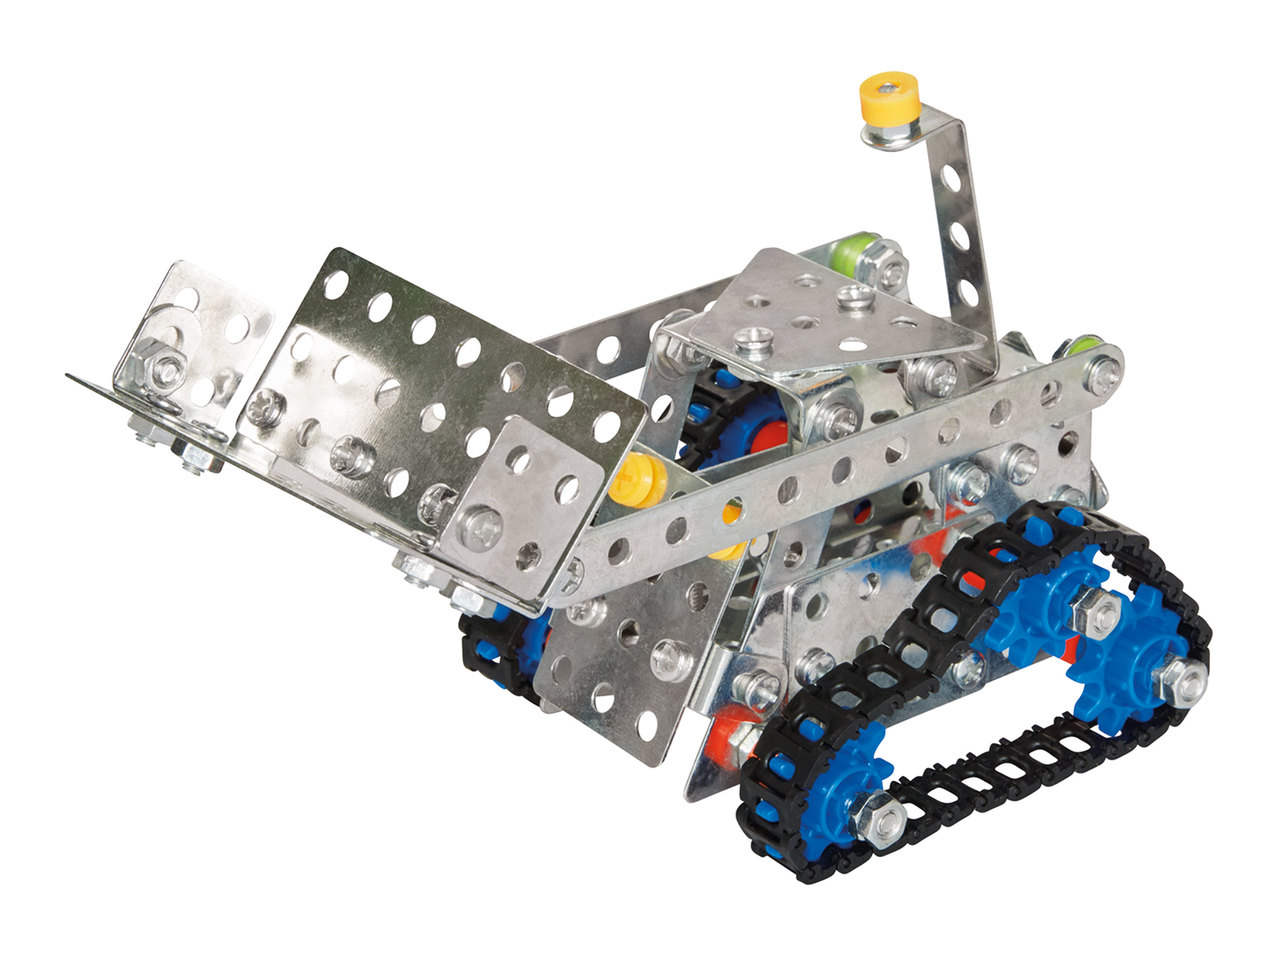 Playtive Metal Vehicle Construction Kit1